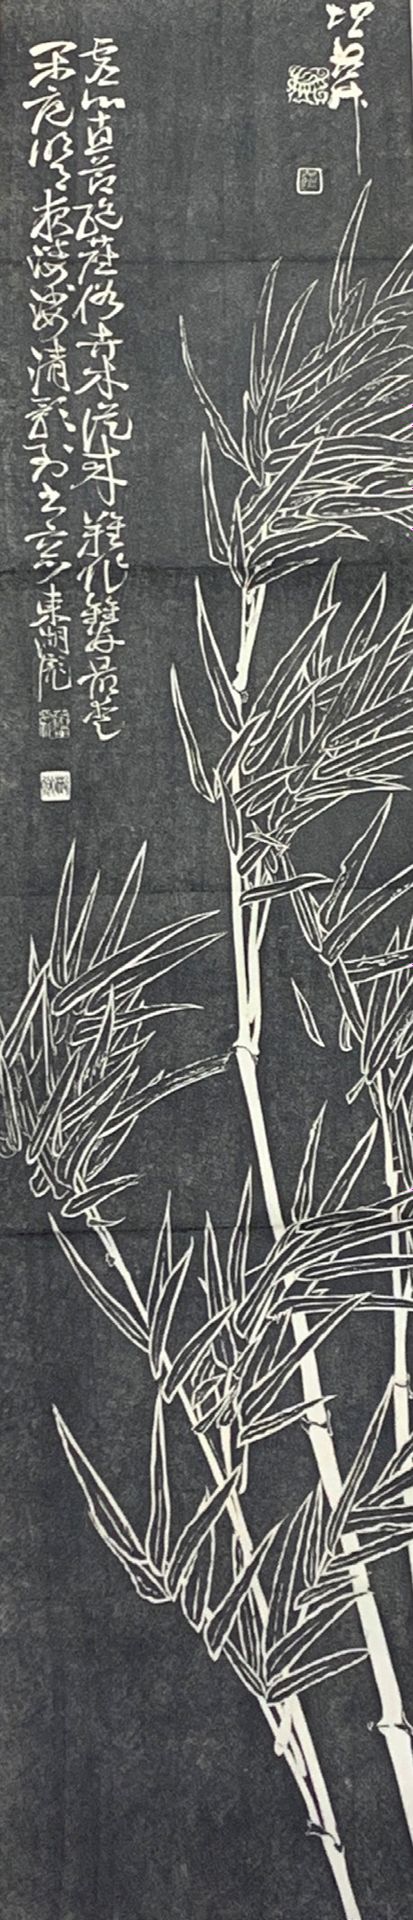 JAPON Kakemono印刷品。
纸上黑色印刷品，显示三根竹子，上面有铭文
Dim. 130 x 30 cm